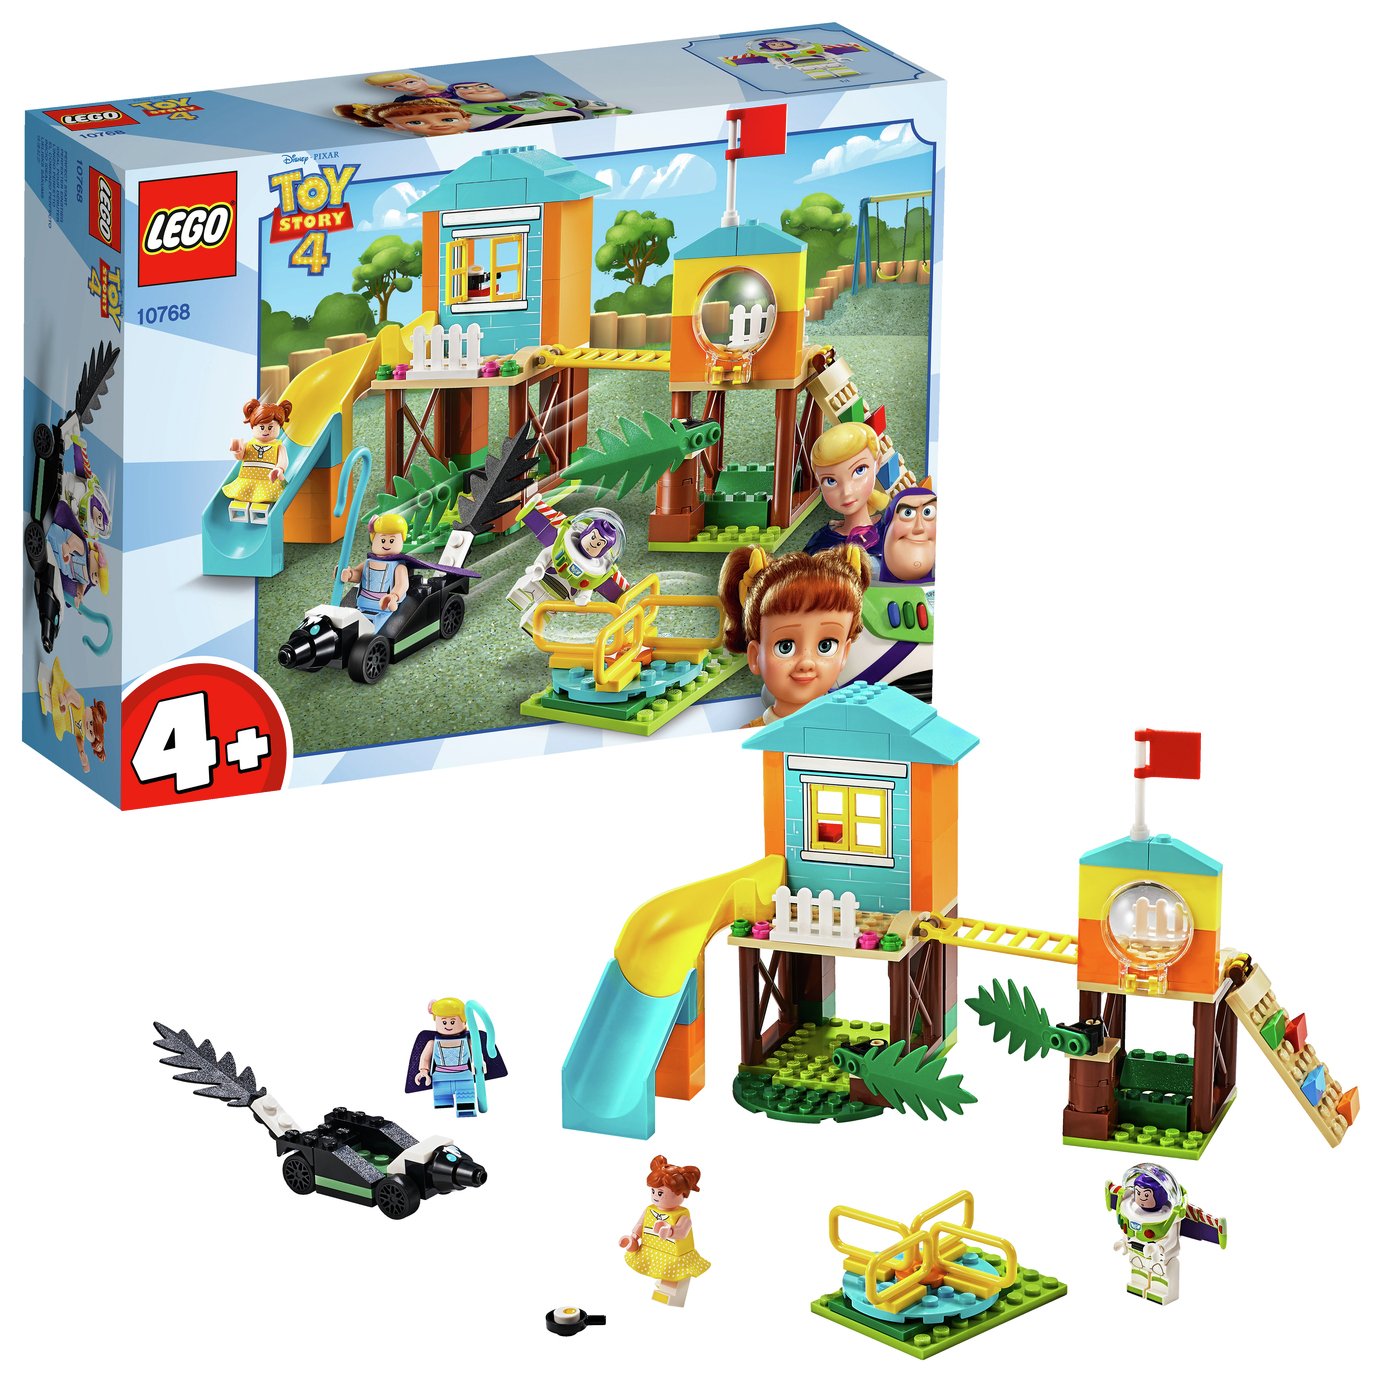 LEGO Toy Story 4 Buzz & Bo Peep's Playground Set - 10768